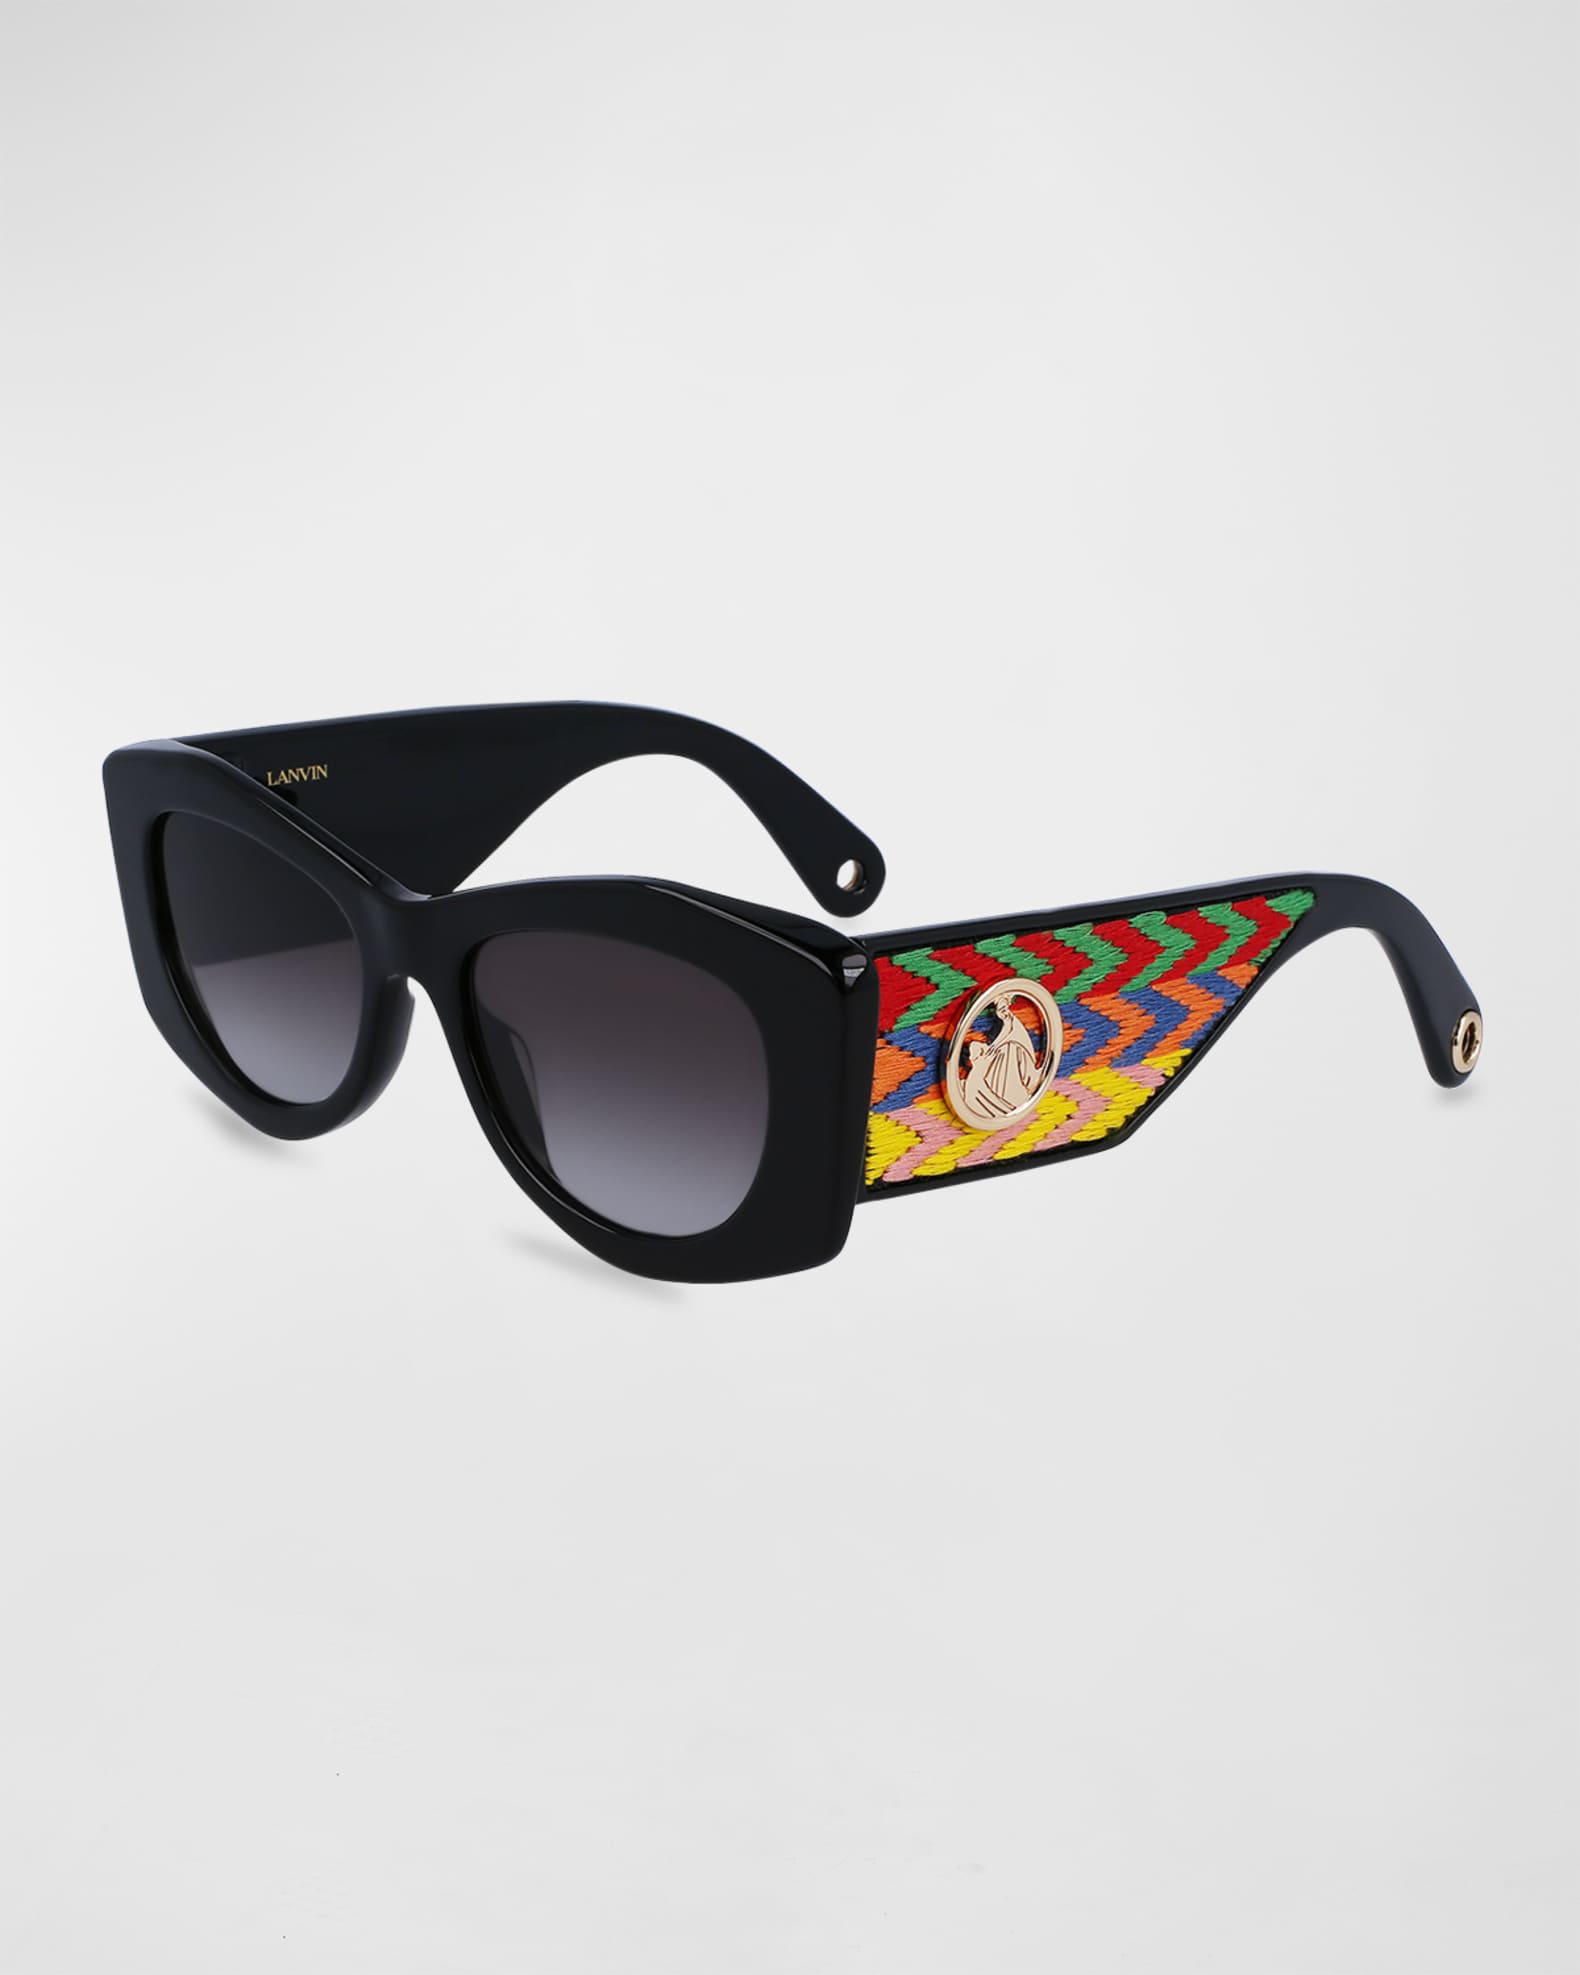 Mengotti Couture® Official Site  Chanel Sunglasses ButterflyGet Chanel  Butterfly Sunglasses at Discounted Rates